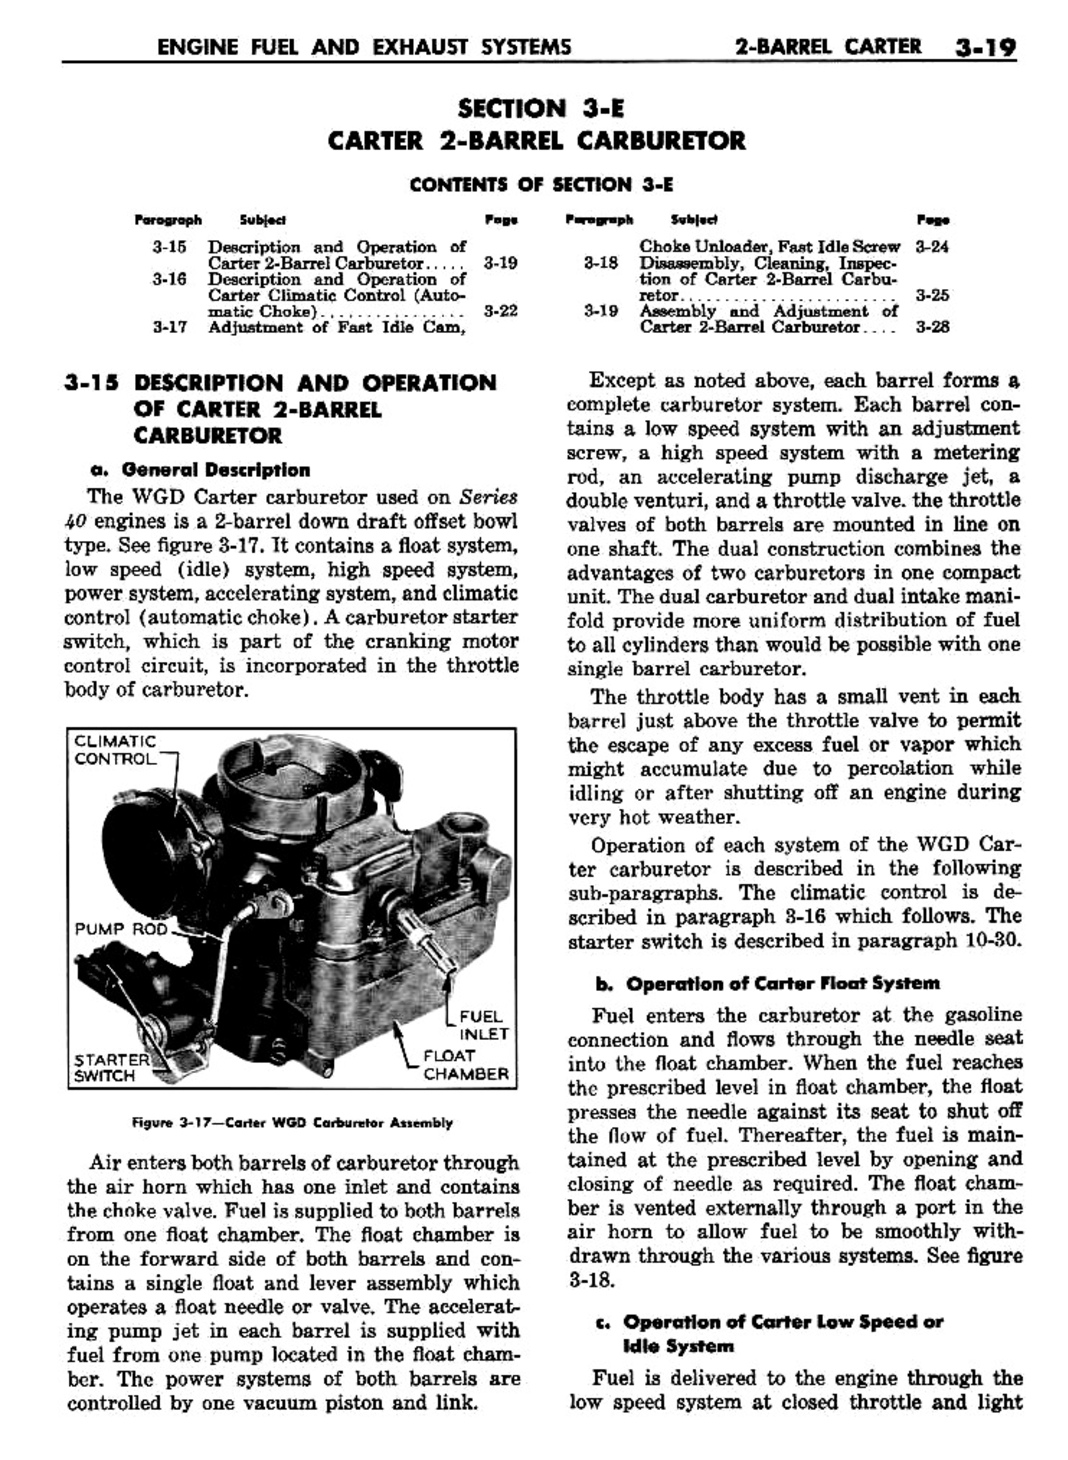 n_04 1957 Buick Shop Manual - Engine Fuel & Exhaust-019-019.jpg